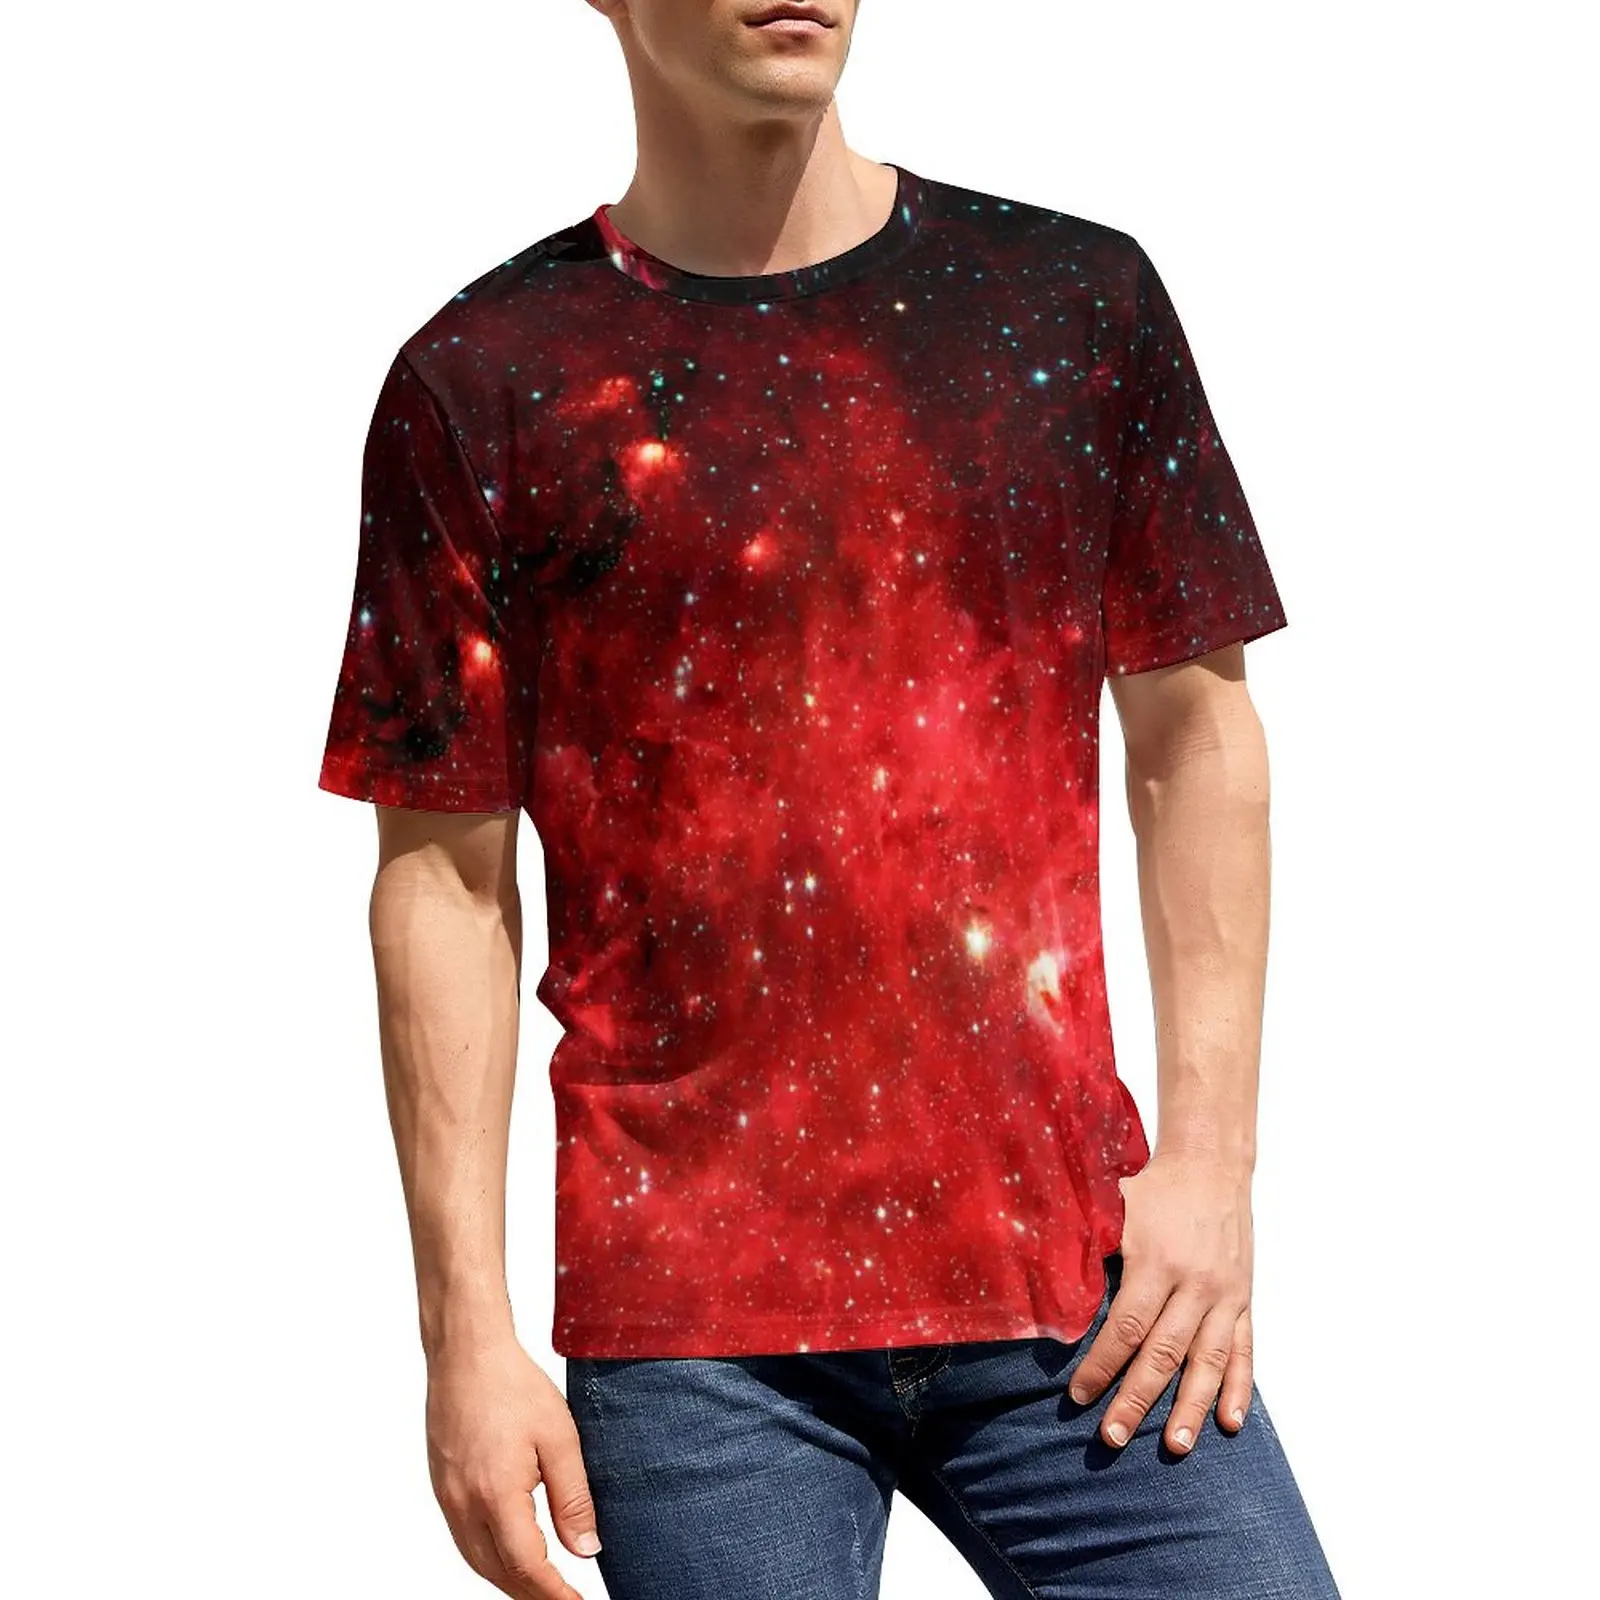 

Galaxy T-Shirt North America Nebula Men Hippie T Shirts Beach Pattern Tees Short Sleeve EMO Big Size Tops Birthday Gift